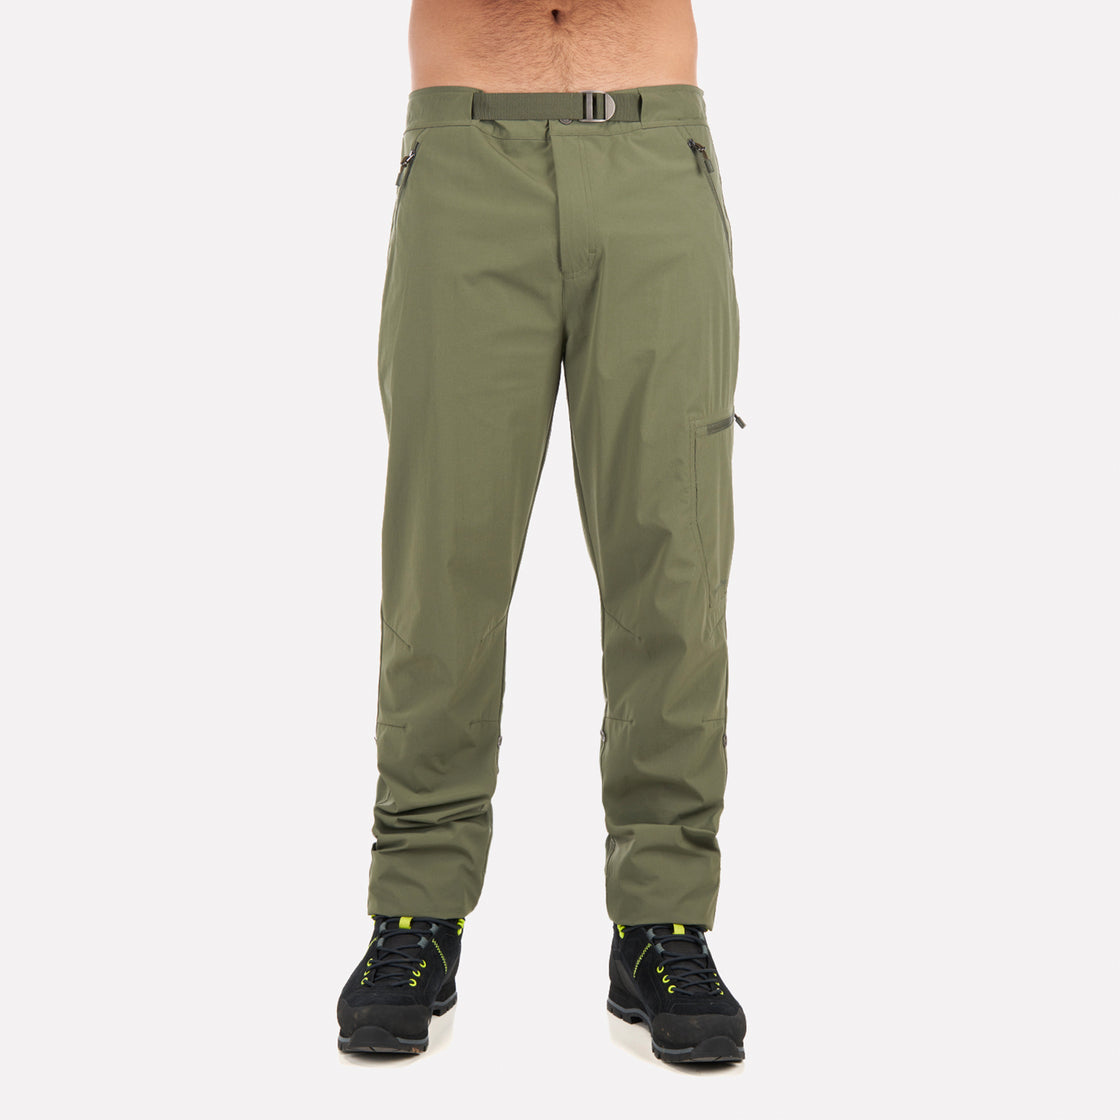 Pantalon Hombre Montatelo Verde Militar Haka Honu